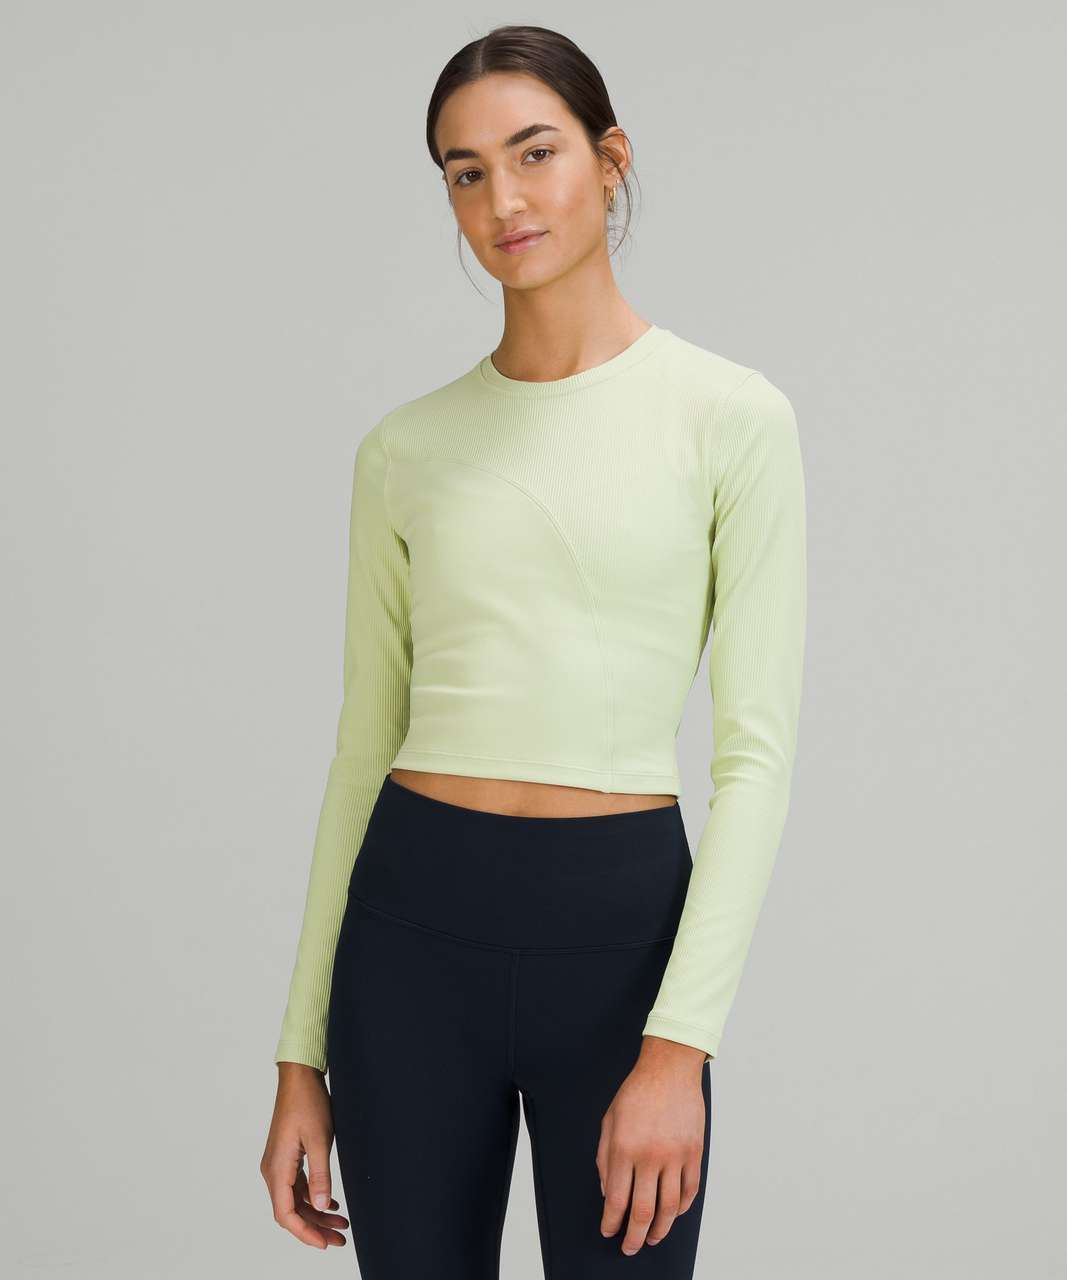 SOISOU Rib Fabric Yoga Shirts Crop Top Seamless Long Sleeve Sports